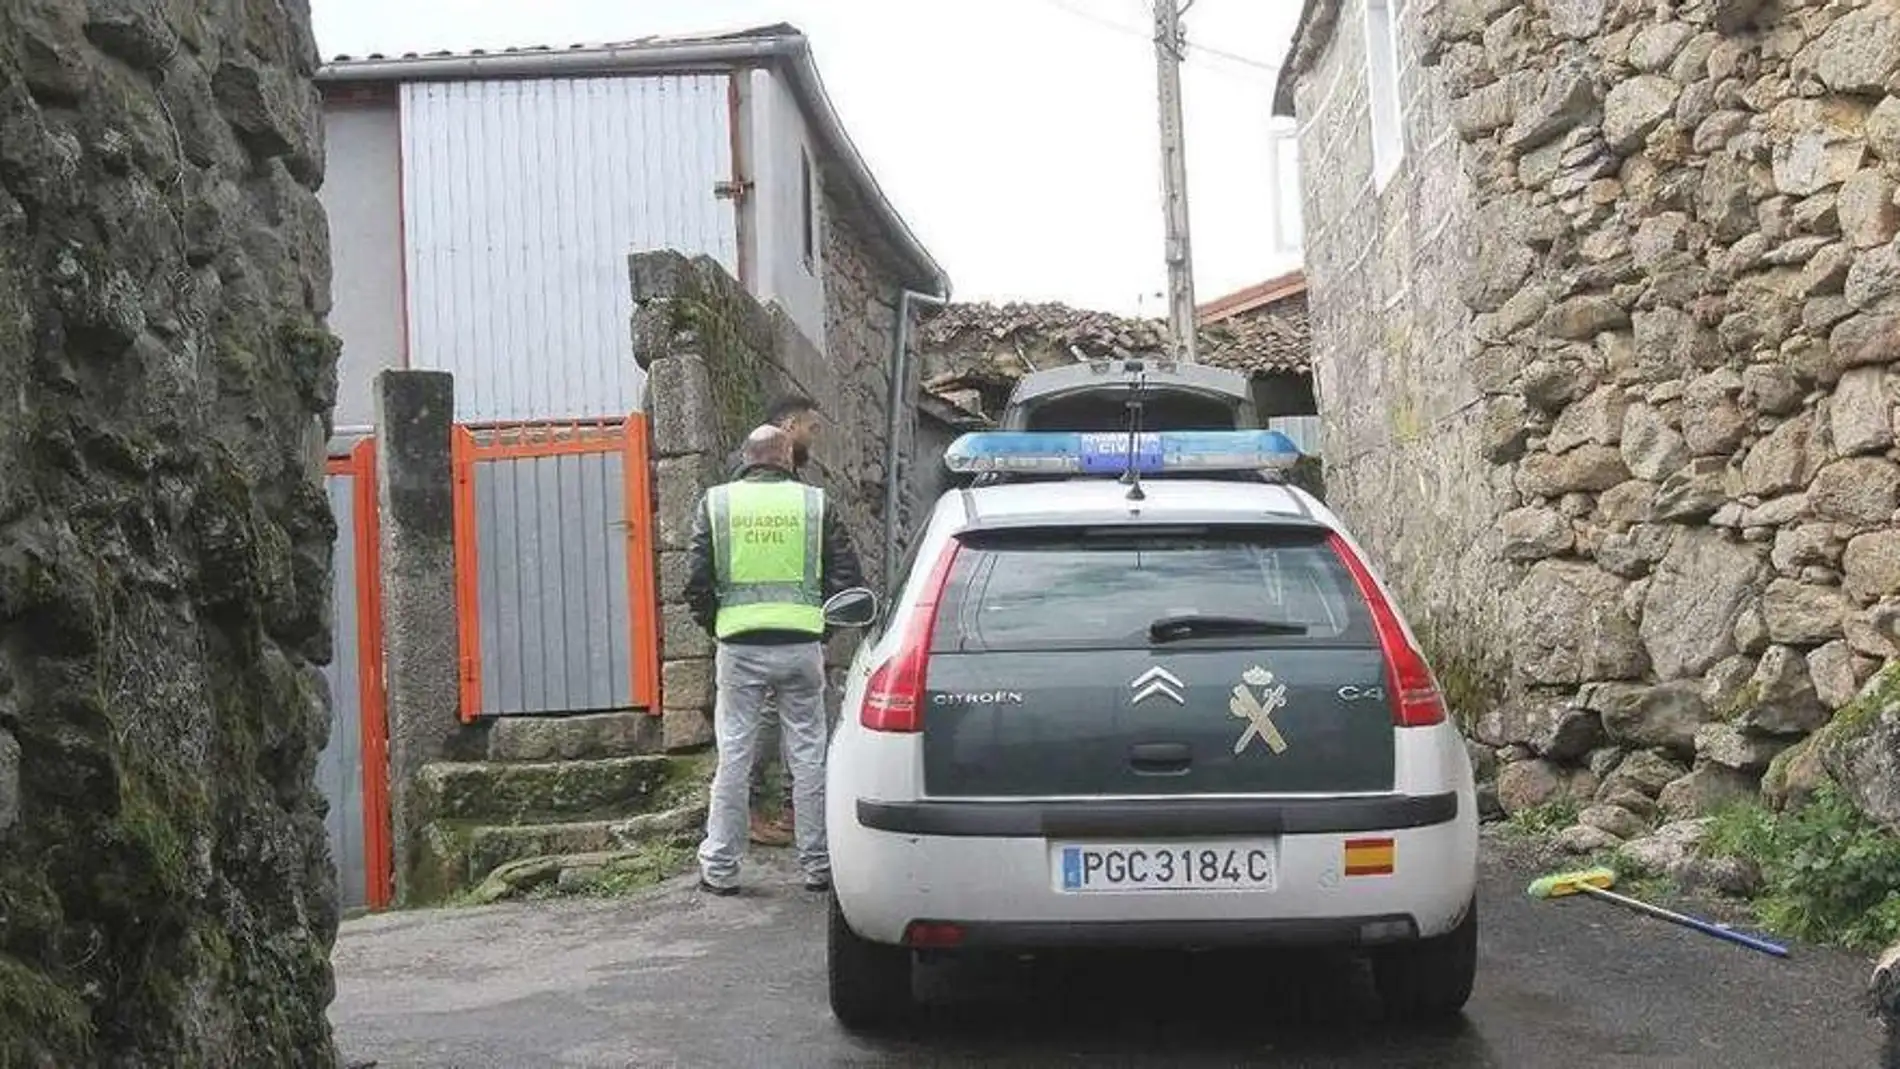 O PP de Ourense denuncia o desmantelamento da seguridade na provincia